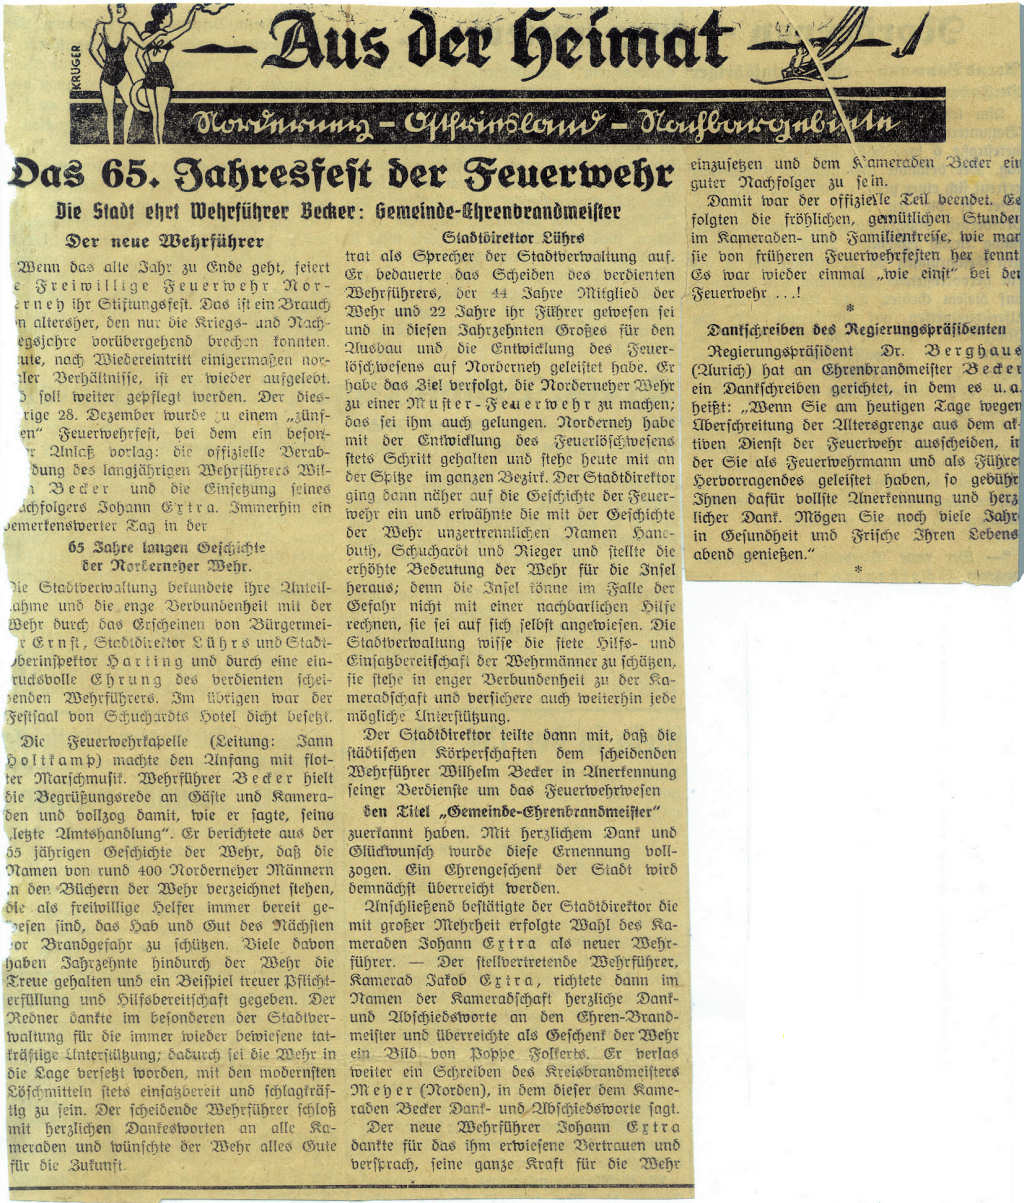 Stadt ehrt Wehrführer Becker - 28.12.1949